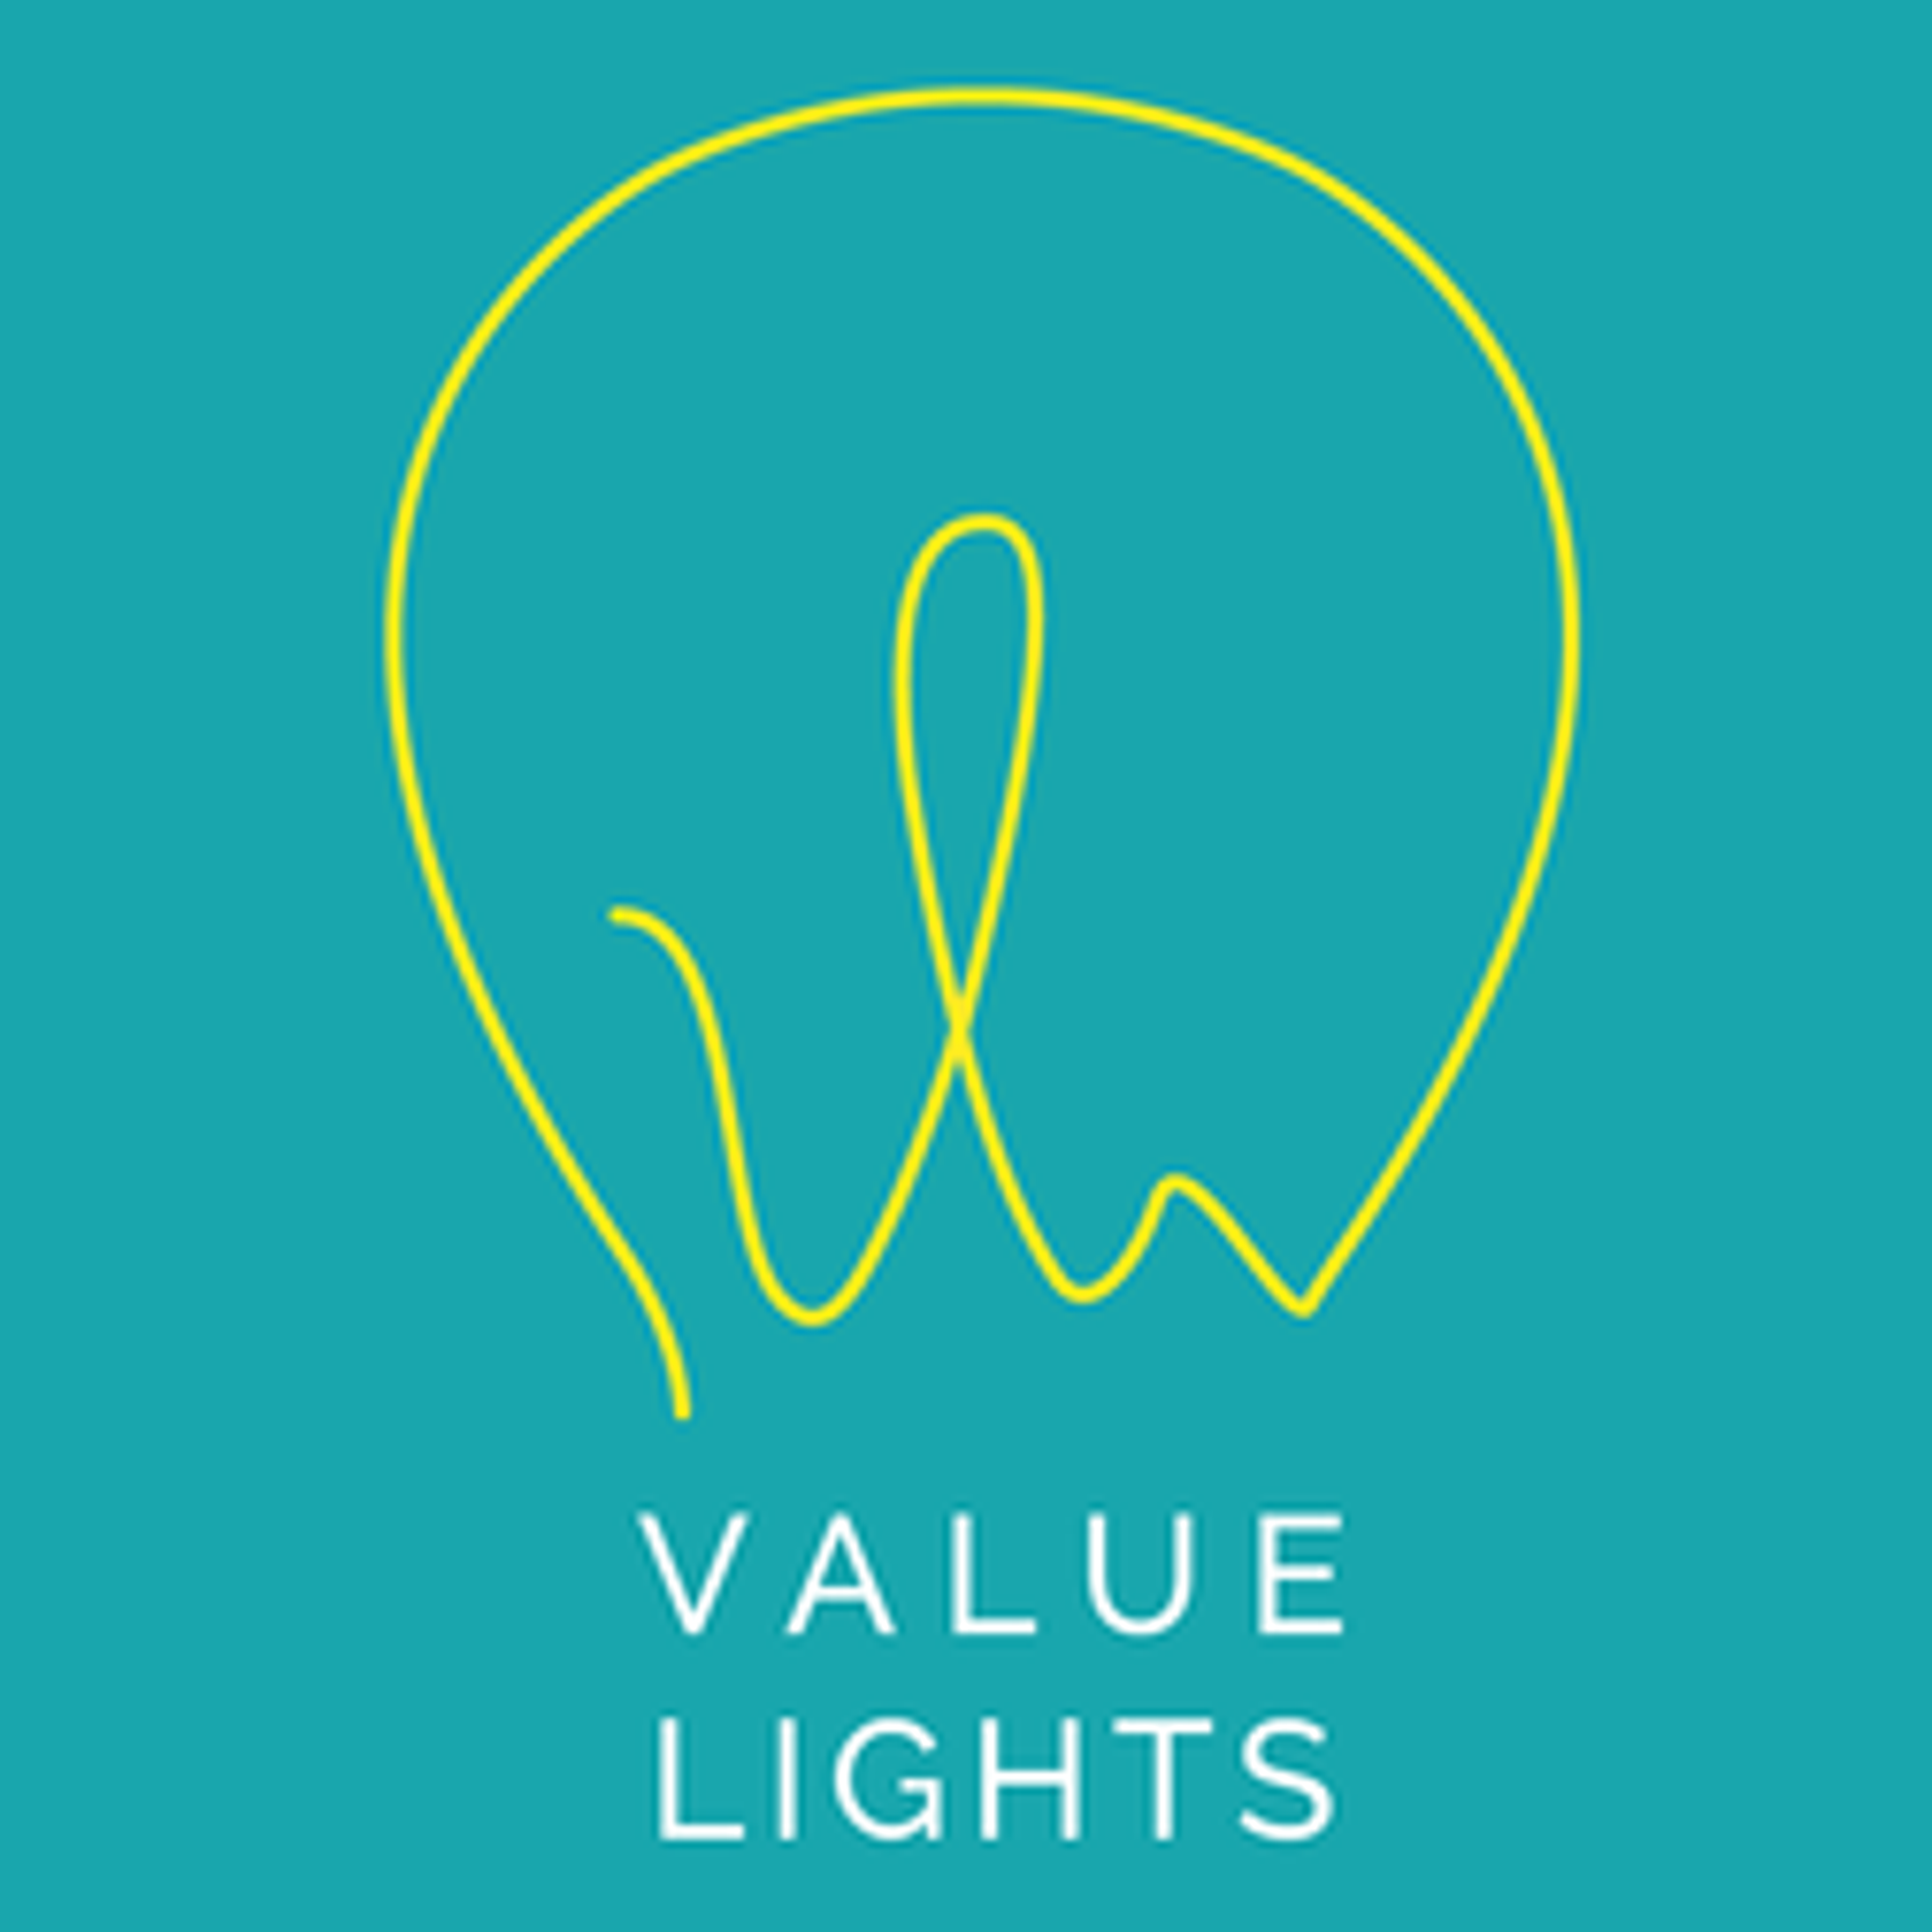  Value Lights 